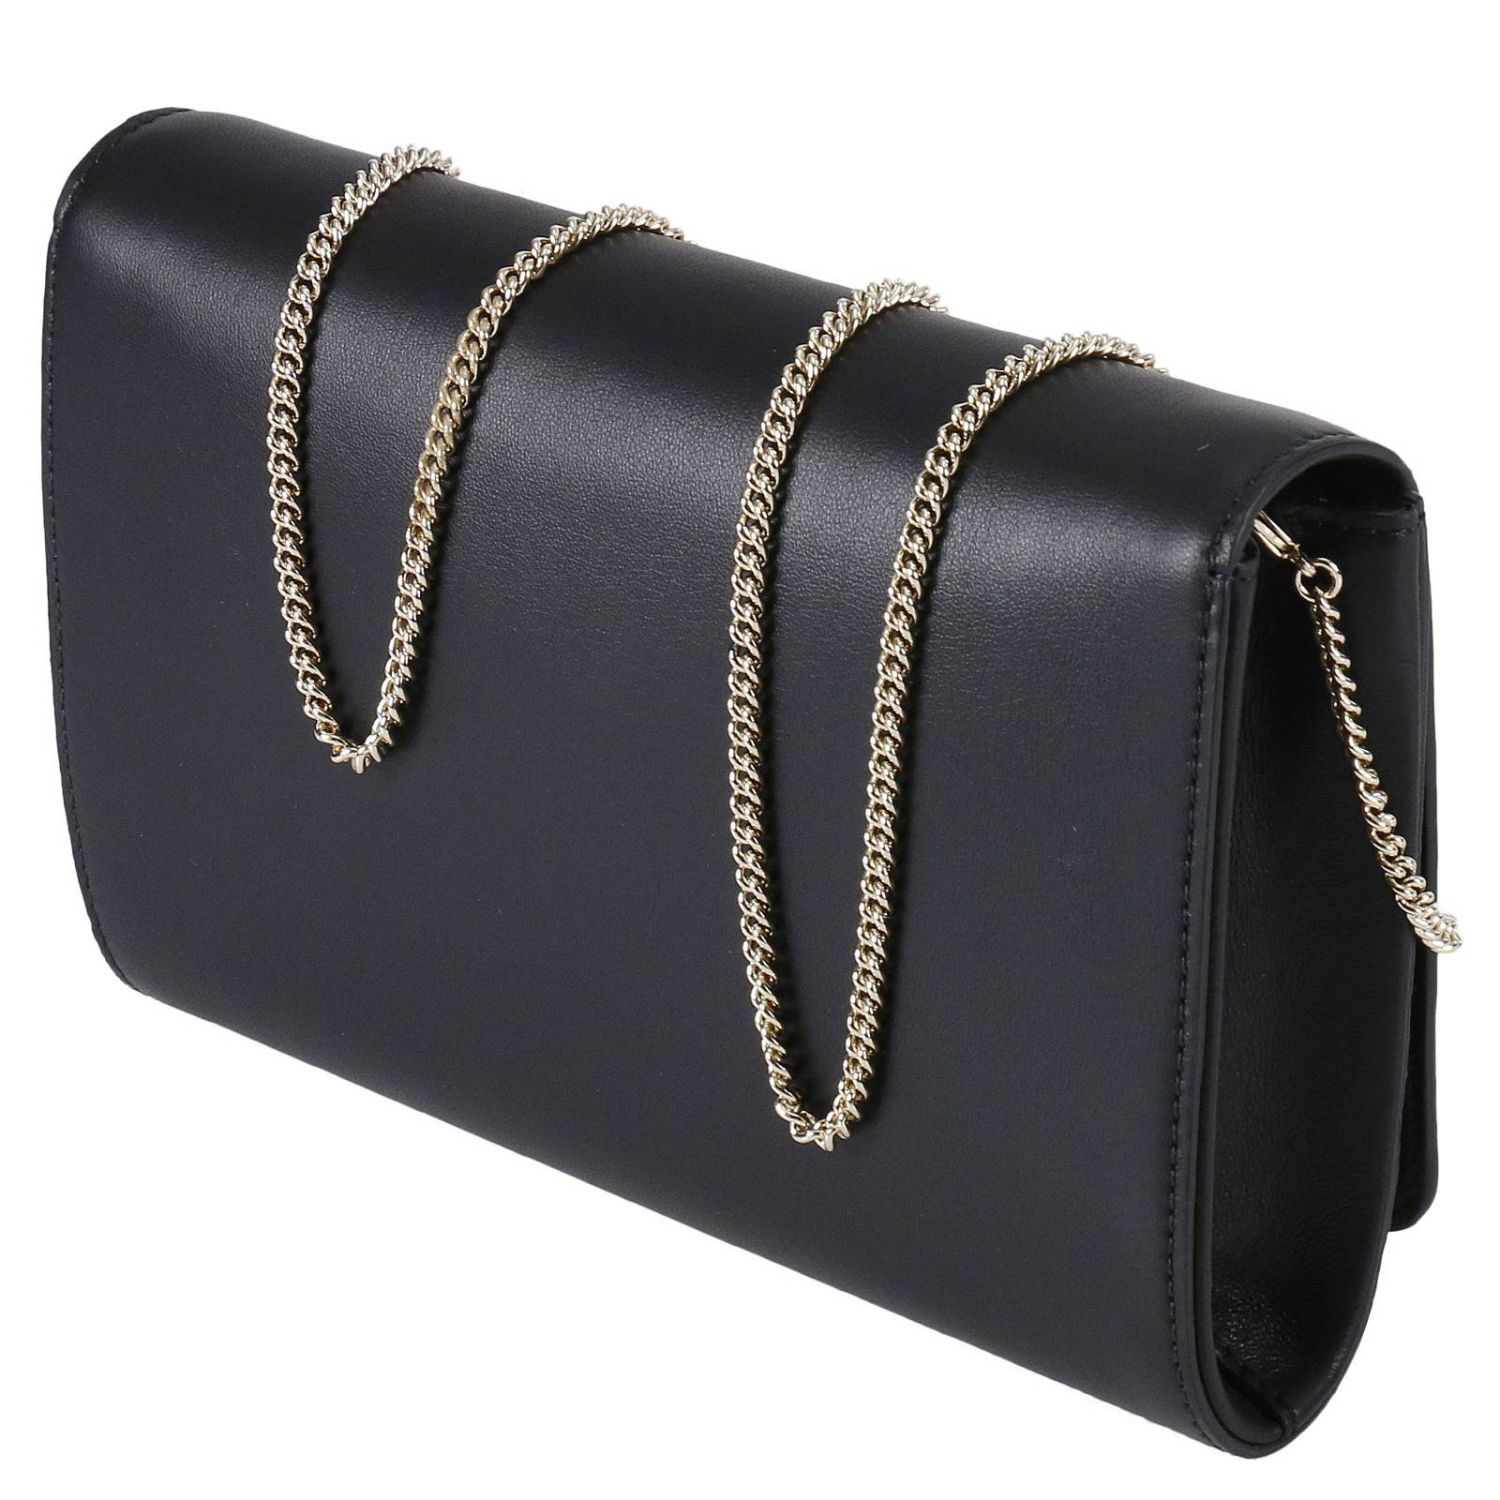 Versace Outlet: Shoulder bag women | Mini Bag Versace Women Black ...